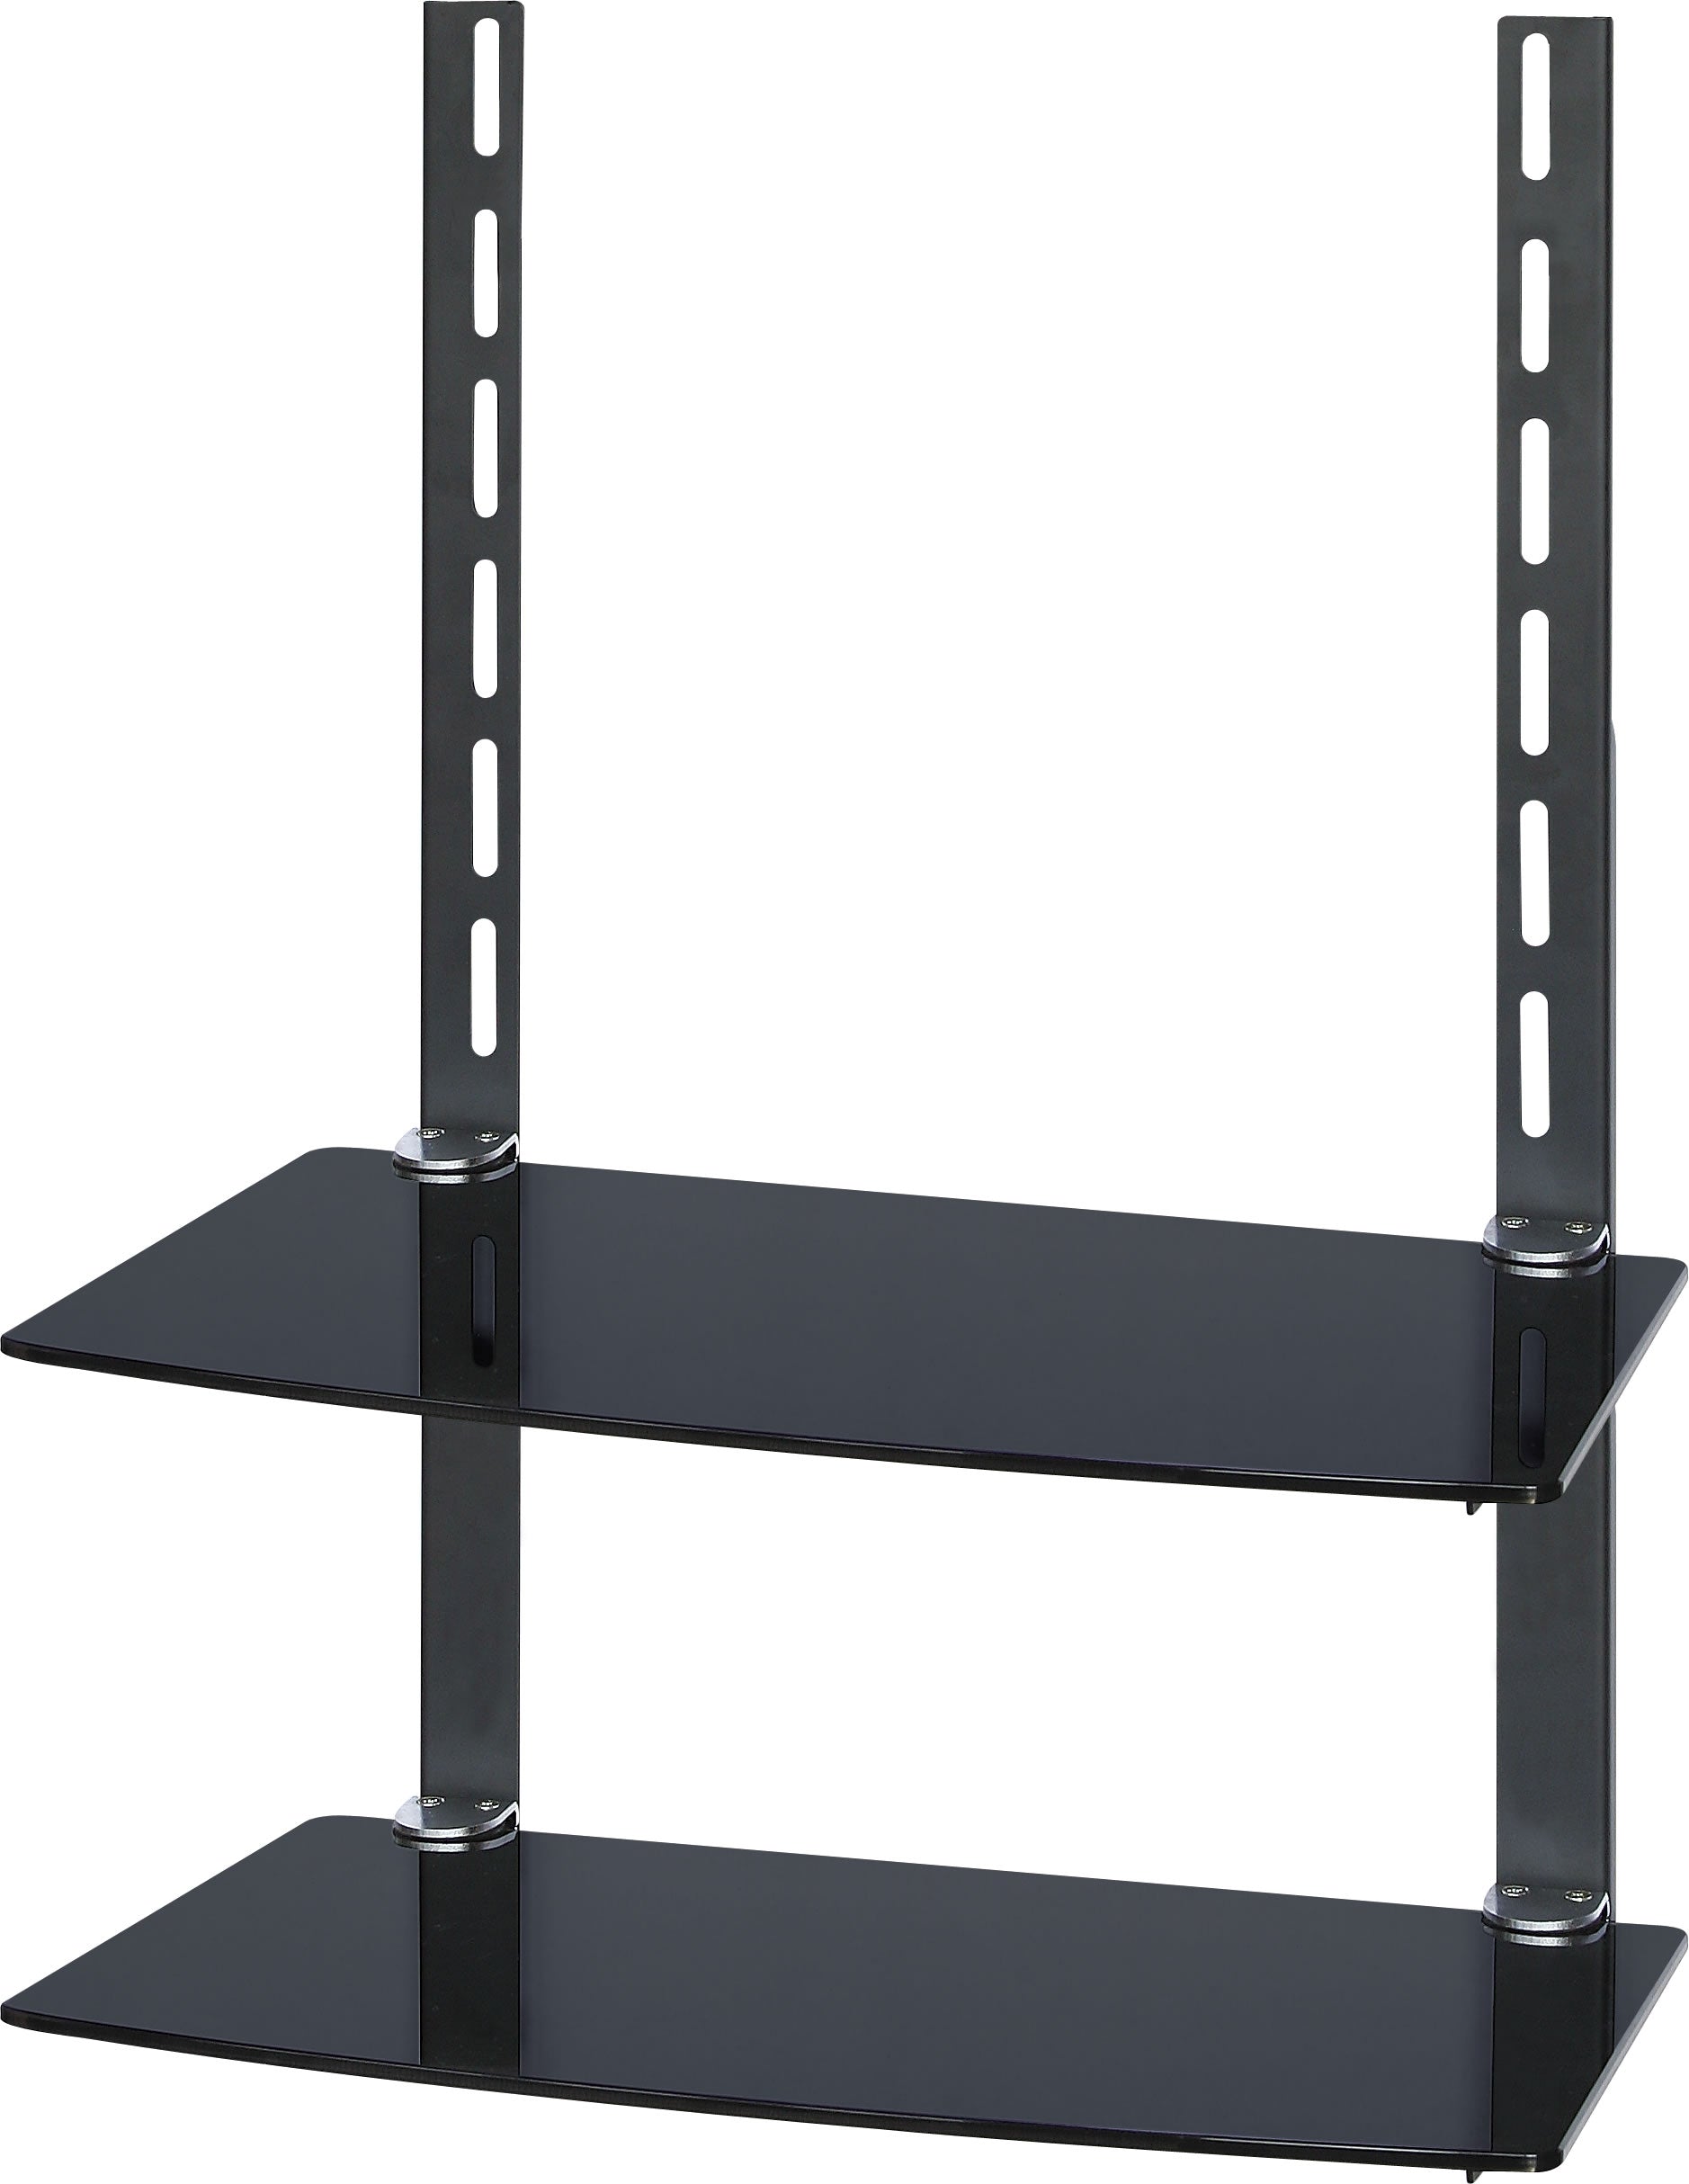 64-1202 Dual Glass Shelf Unit for Wall Mount TV Bracket